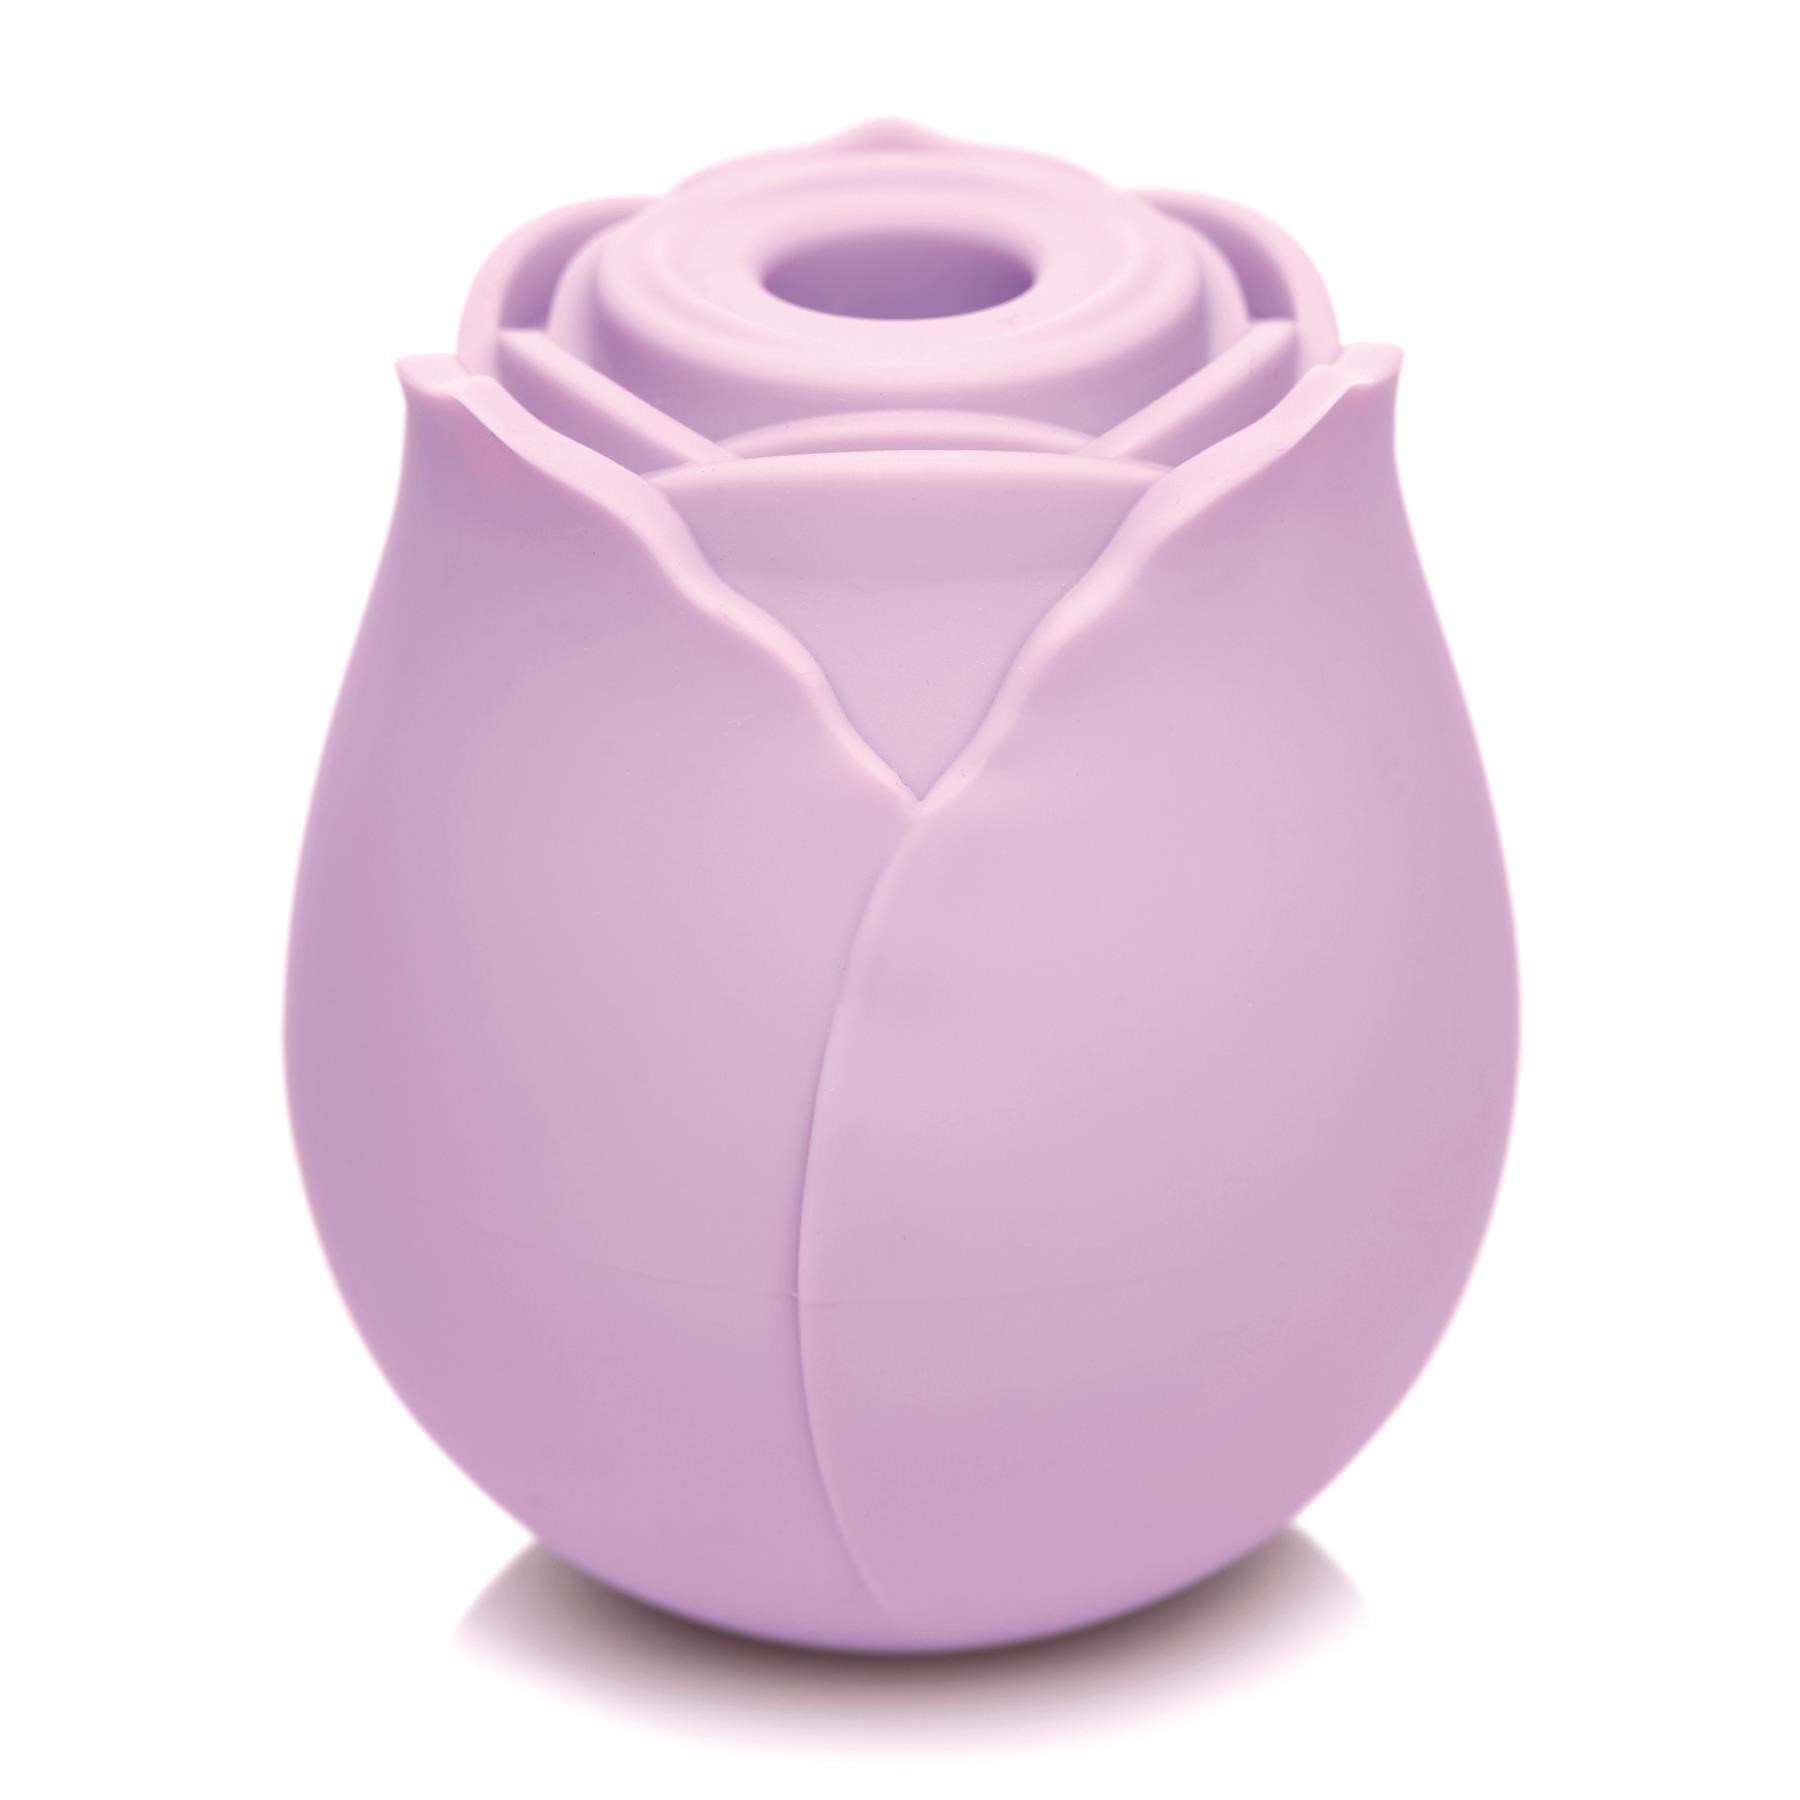 Bloomgasm Suction Rose Clitoral Stimulator Upright Product Shot #1 - Purple